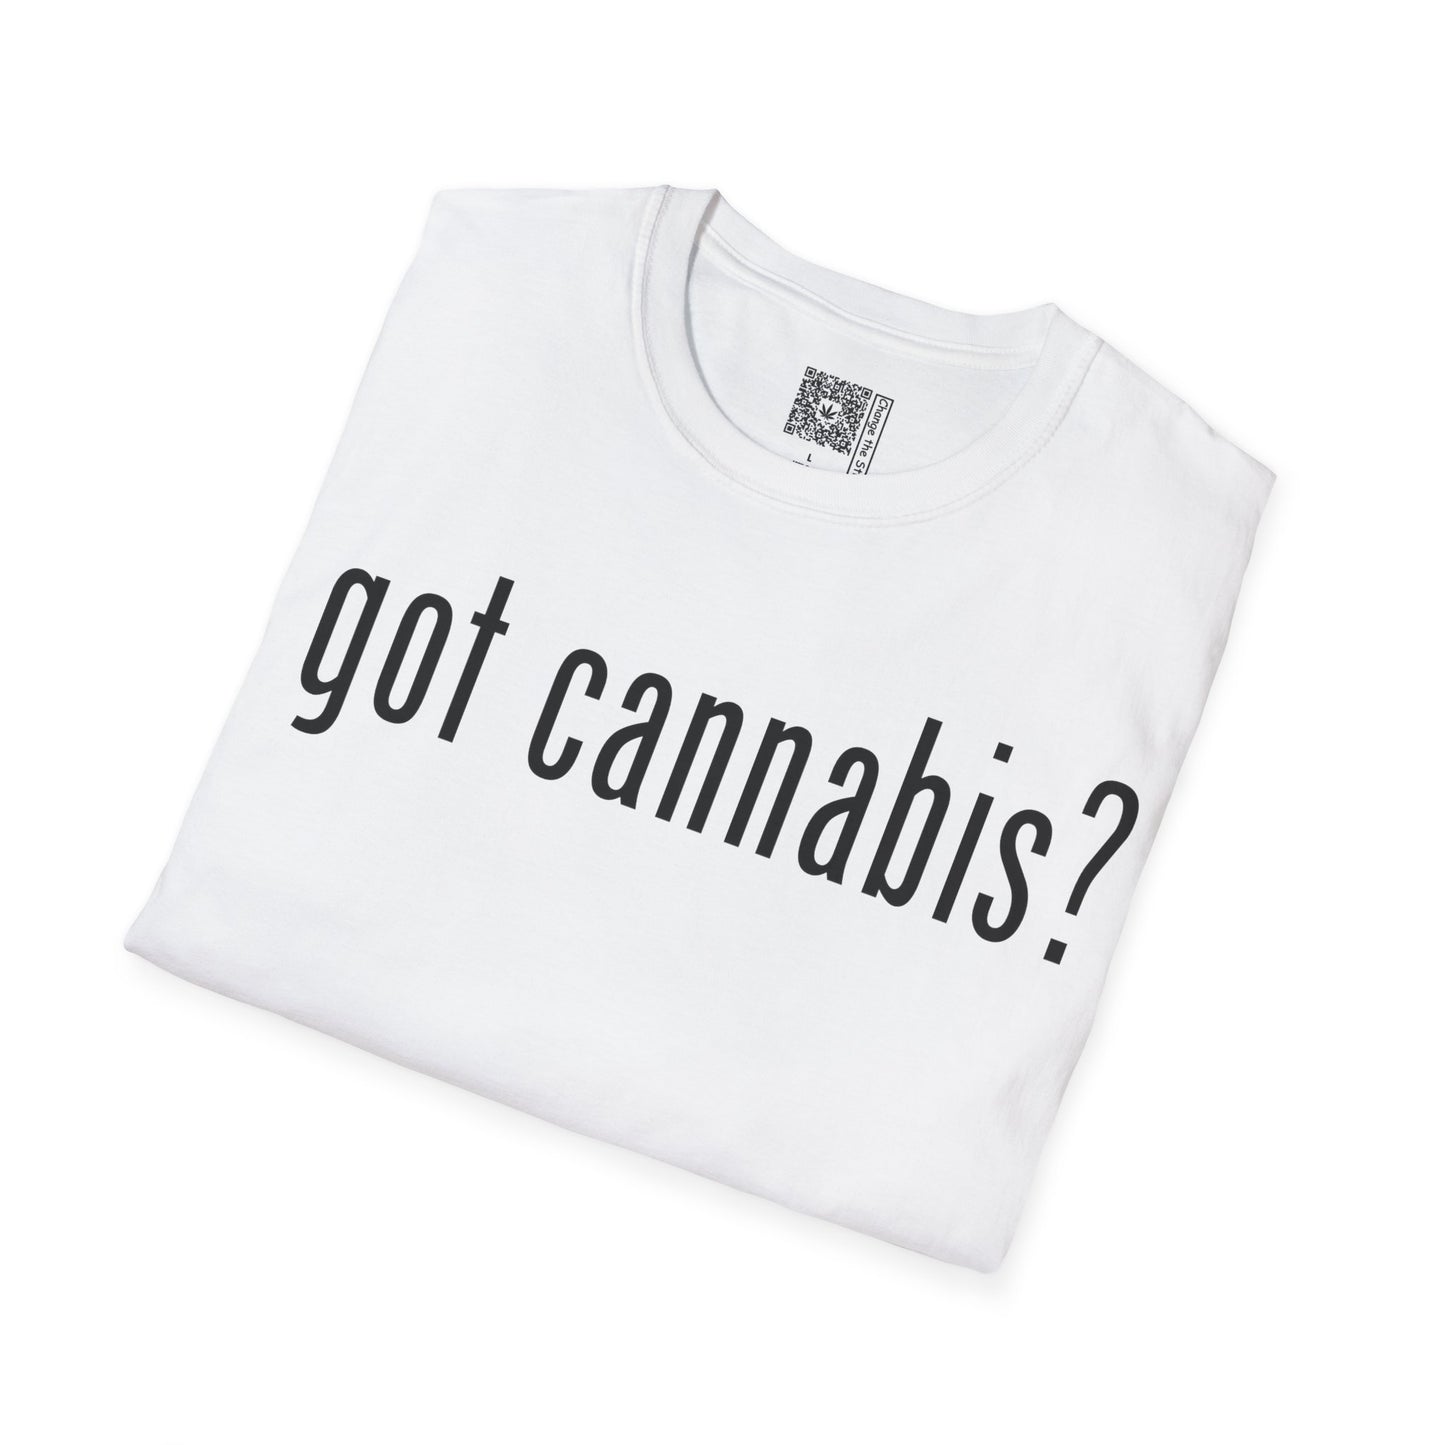 Change the Stigma GOT CANNABIS Weed Shirt